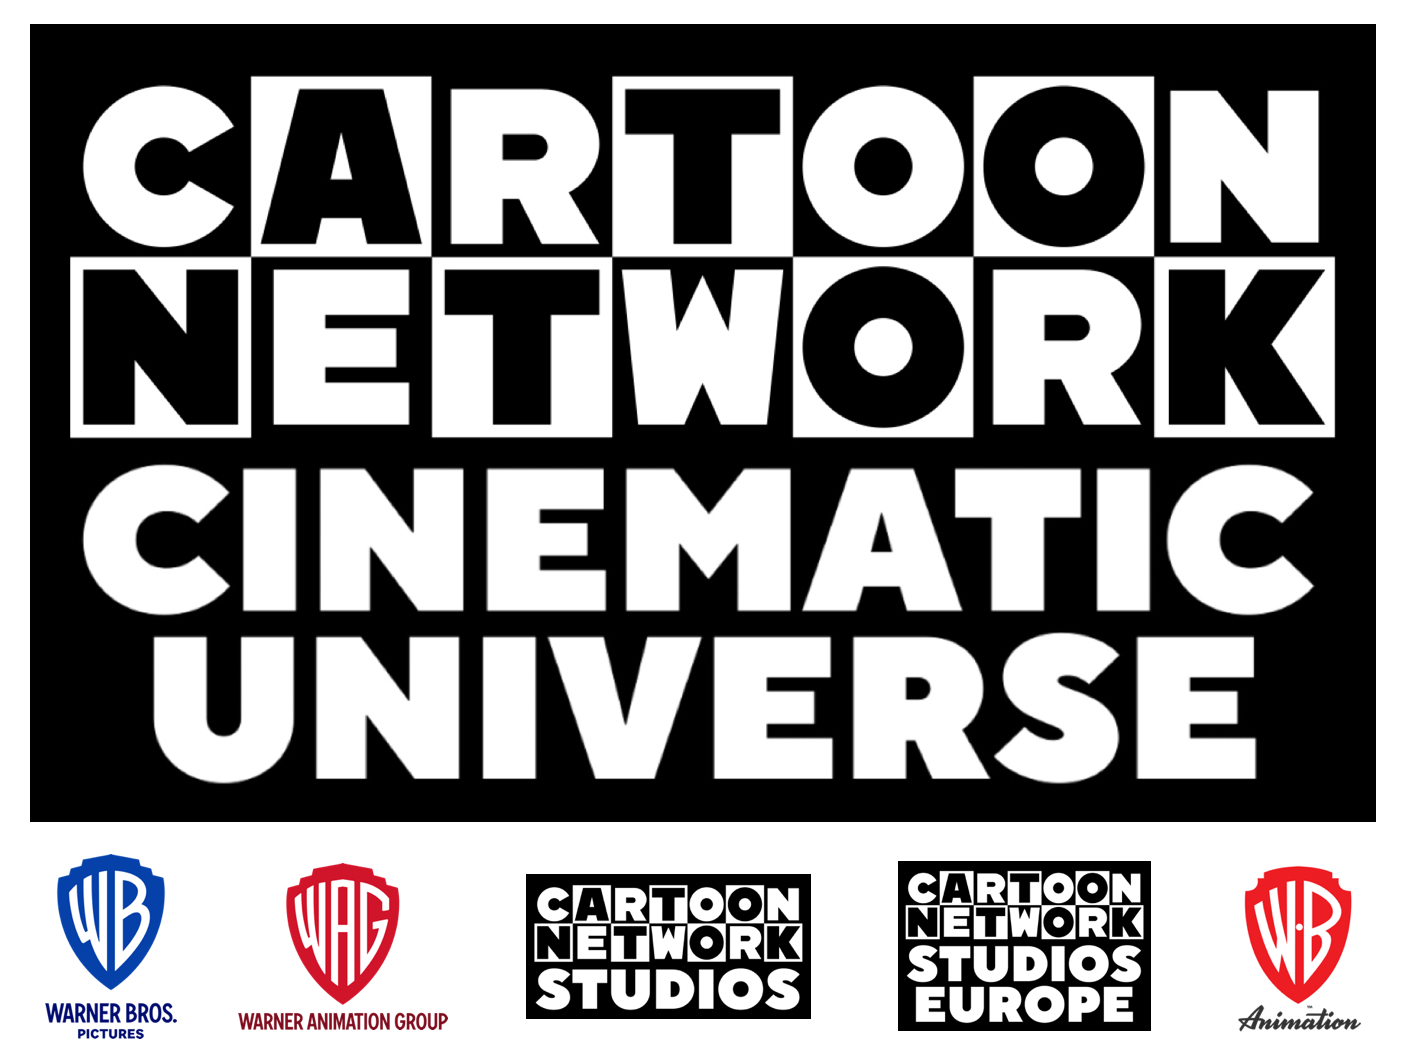 Cartoon Network Cinematic Universe companies by VictorPinas on DeviantArt